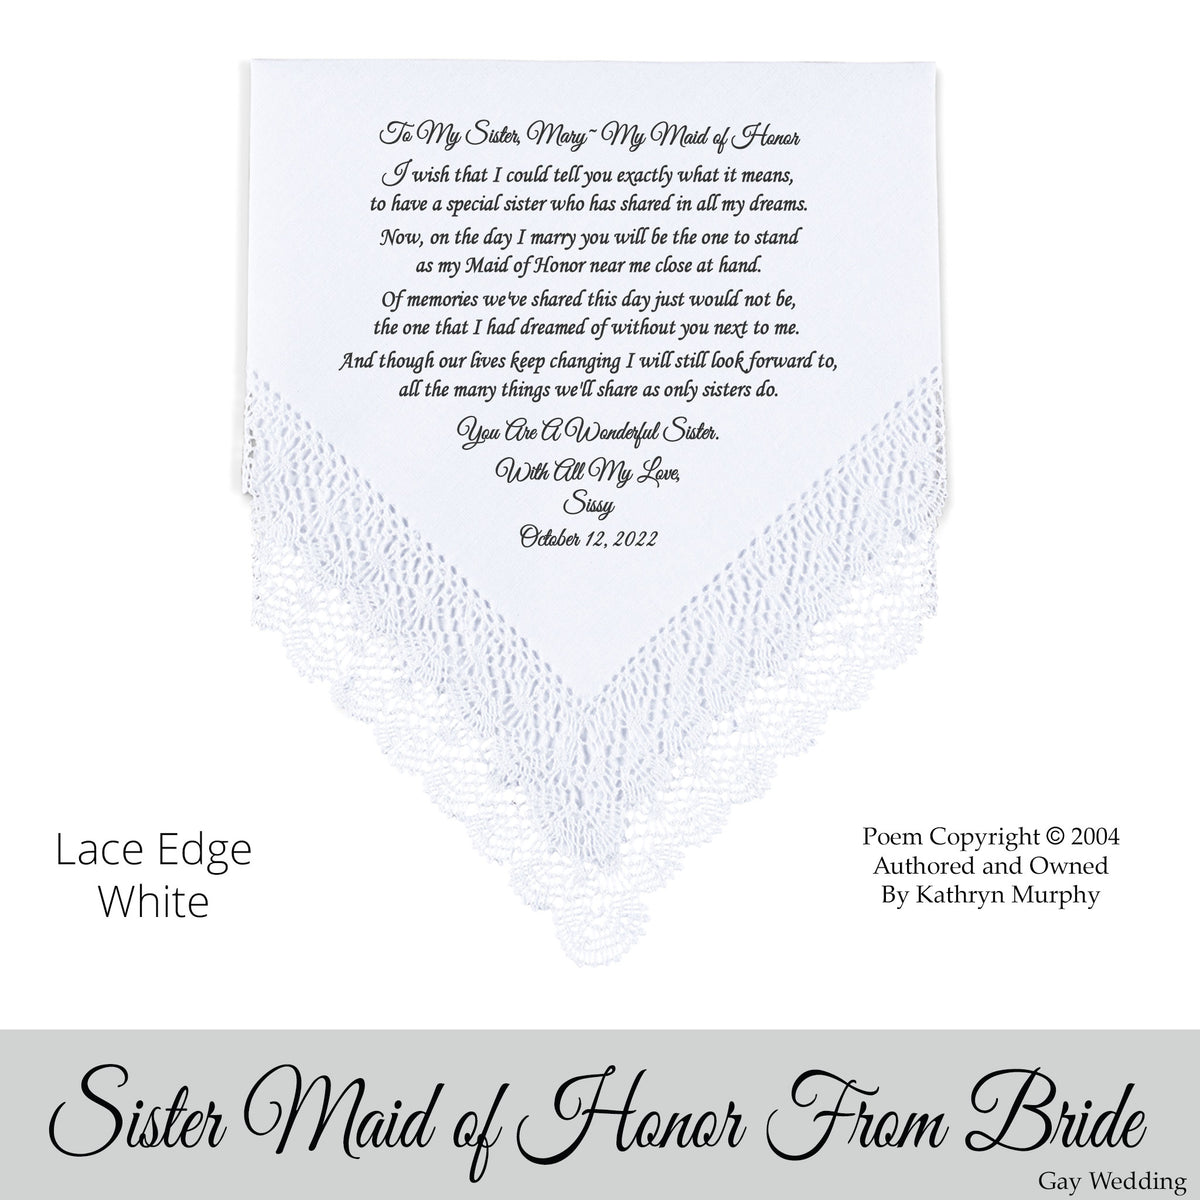 Gay Wedding Gift for the Sister Maid of Honor poem printed wedding hankie